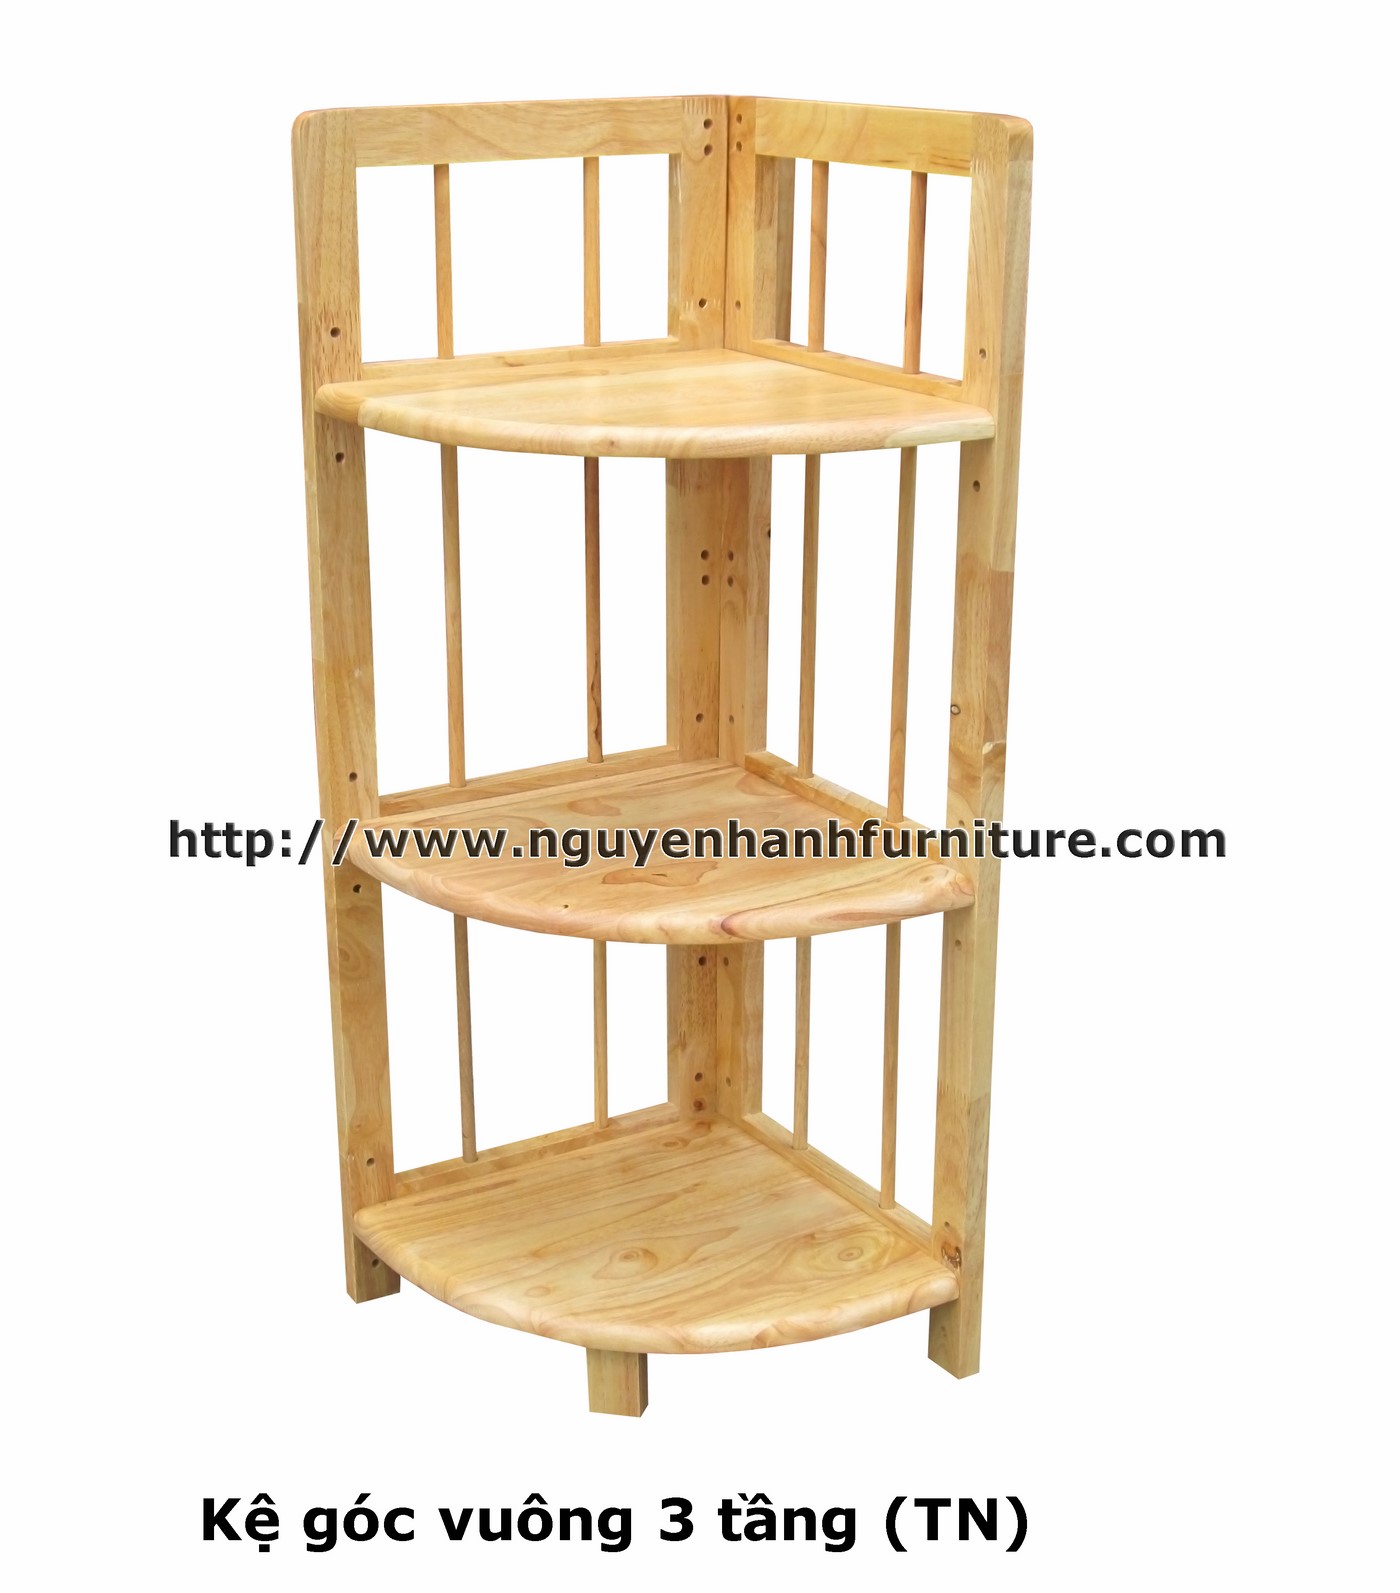 Name product: Square corner shelf 3 floors (Natural) - Dimensions: 36 x 36 x 91 (H) - Description: Wood natural rubber (Natural)